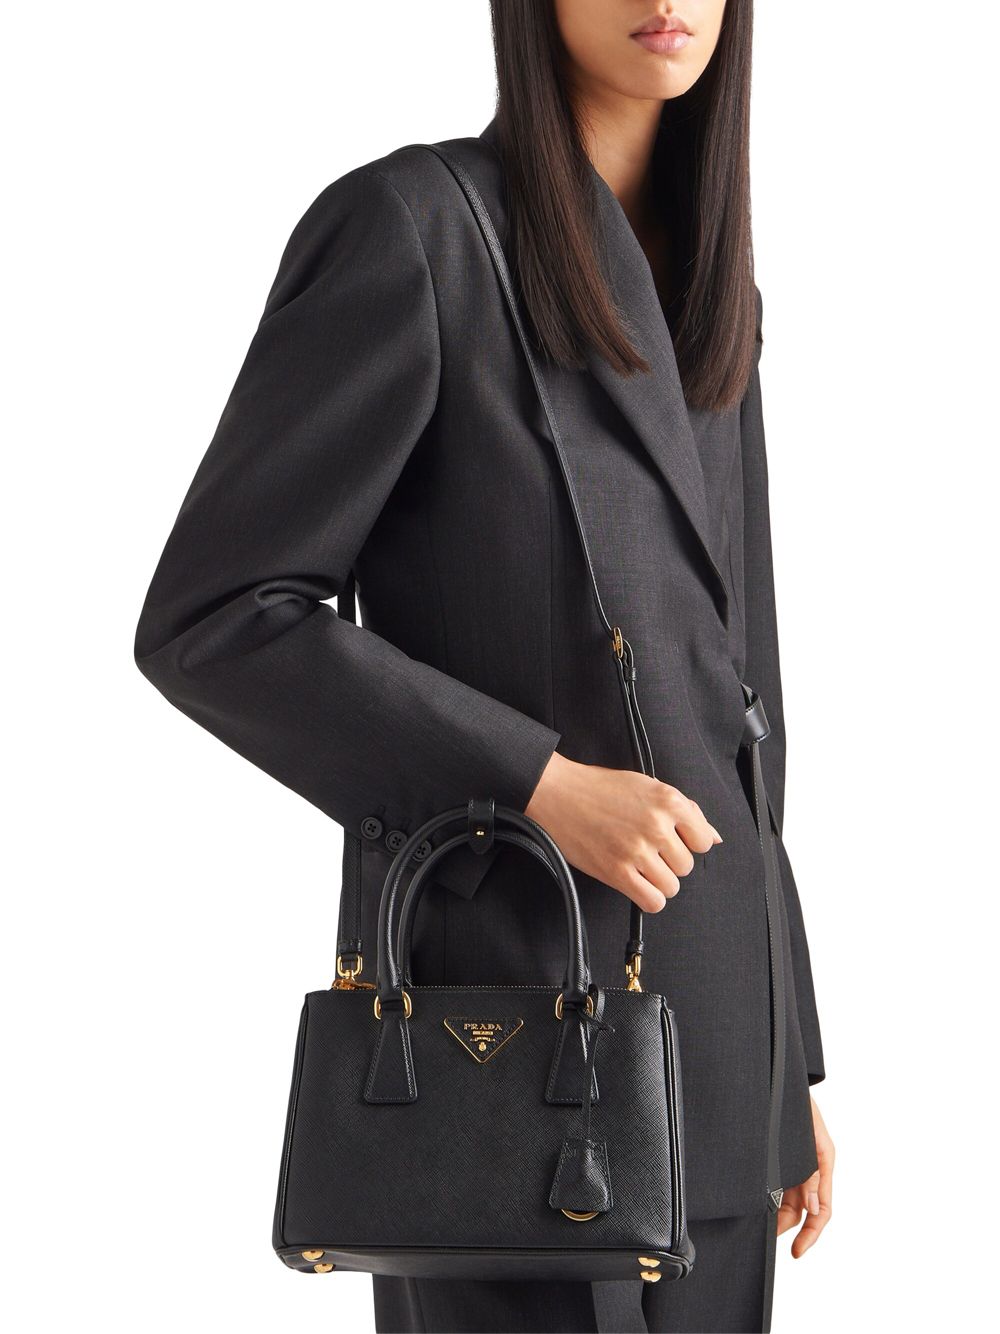 Сумка Prada Small Galleria Saffiano Leather Bag, черный